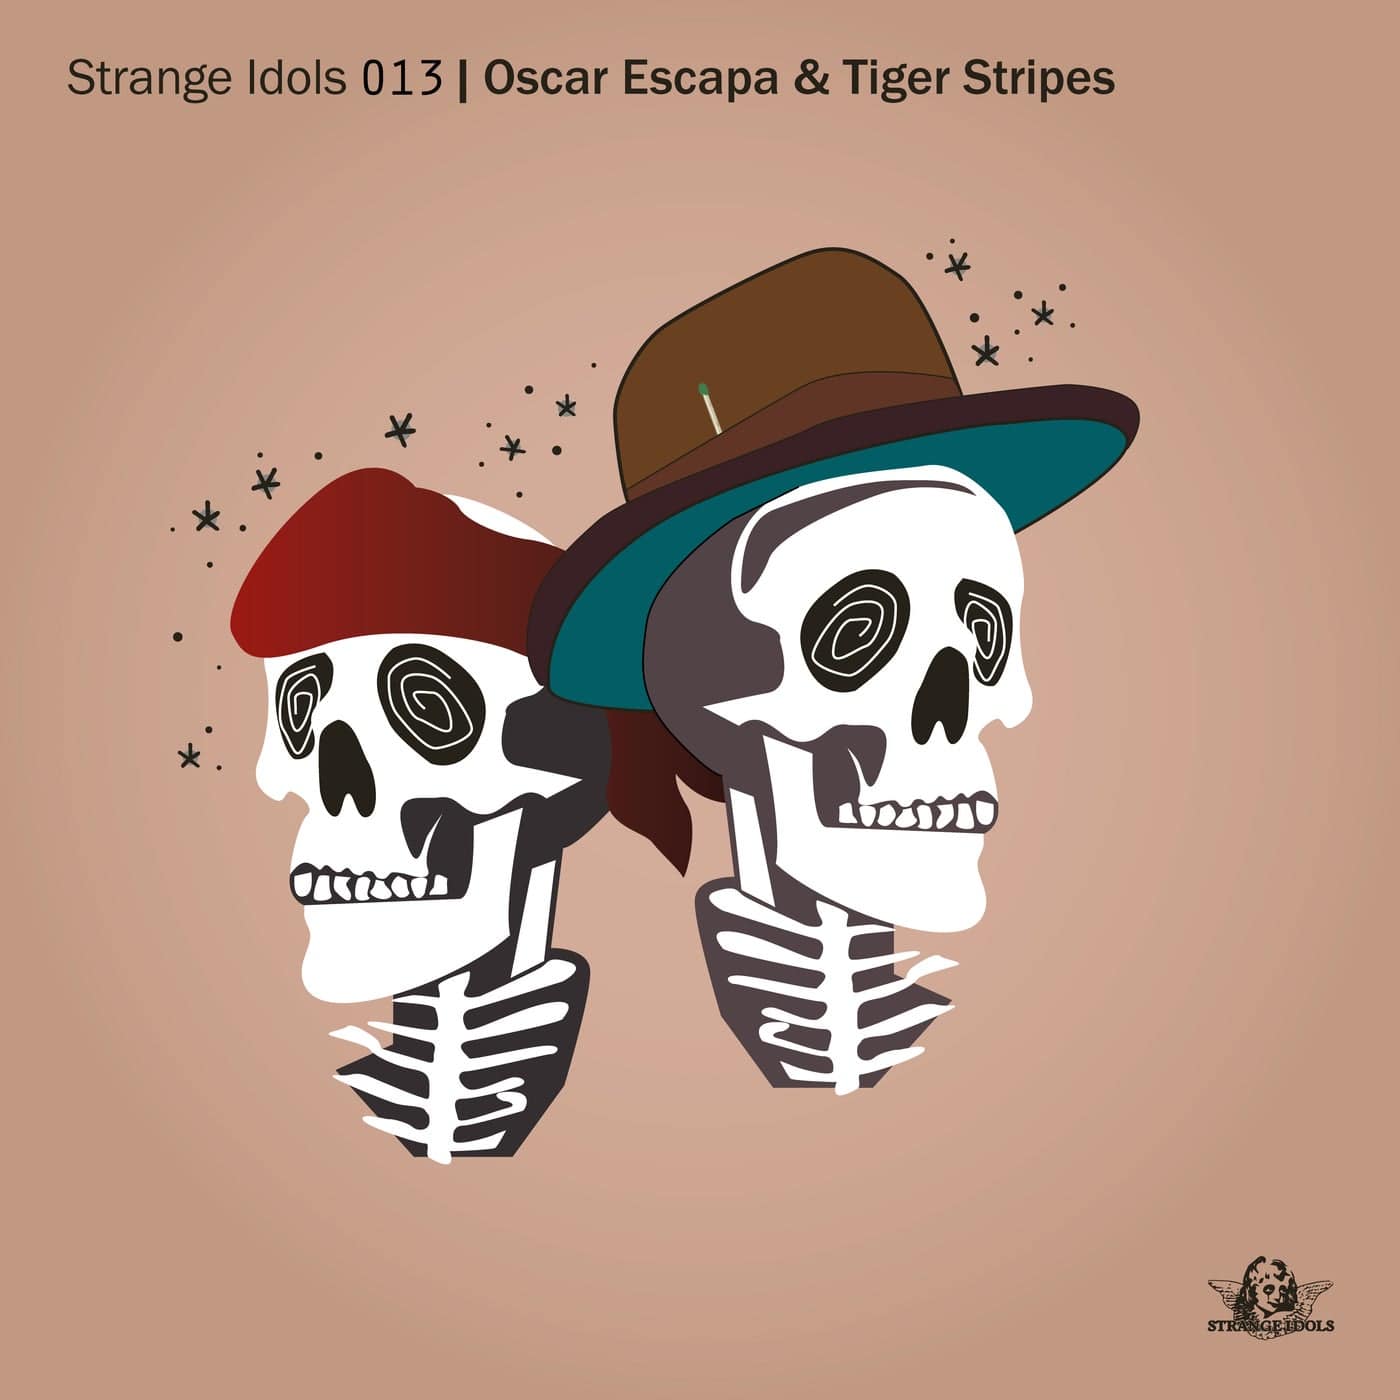 image cover: Trance Like State EP by Tiger Stripes, Oscar Escapa on Strange Idols